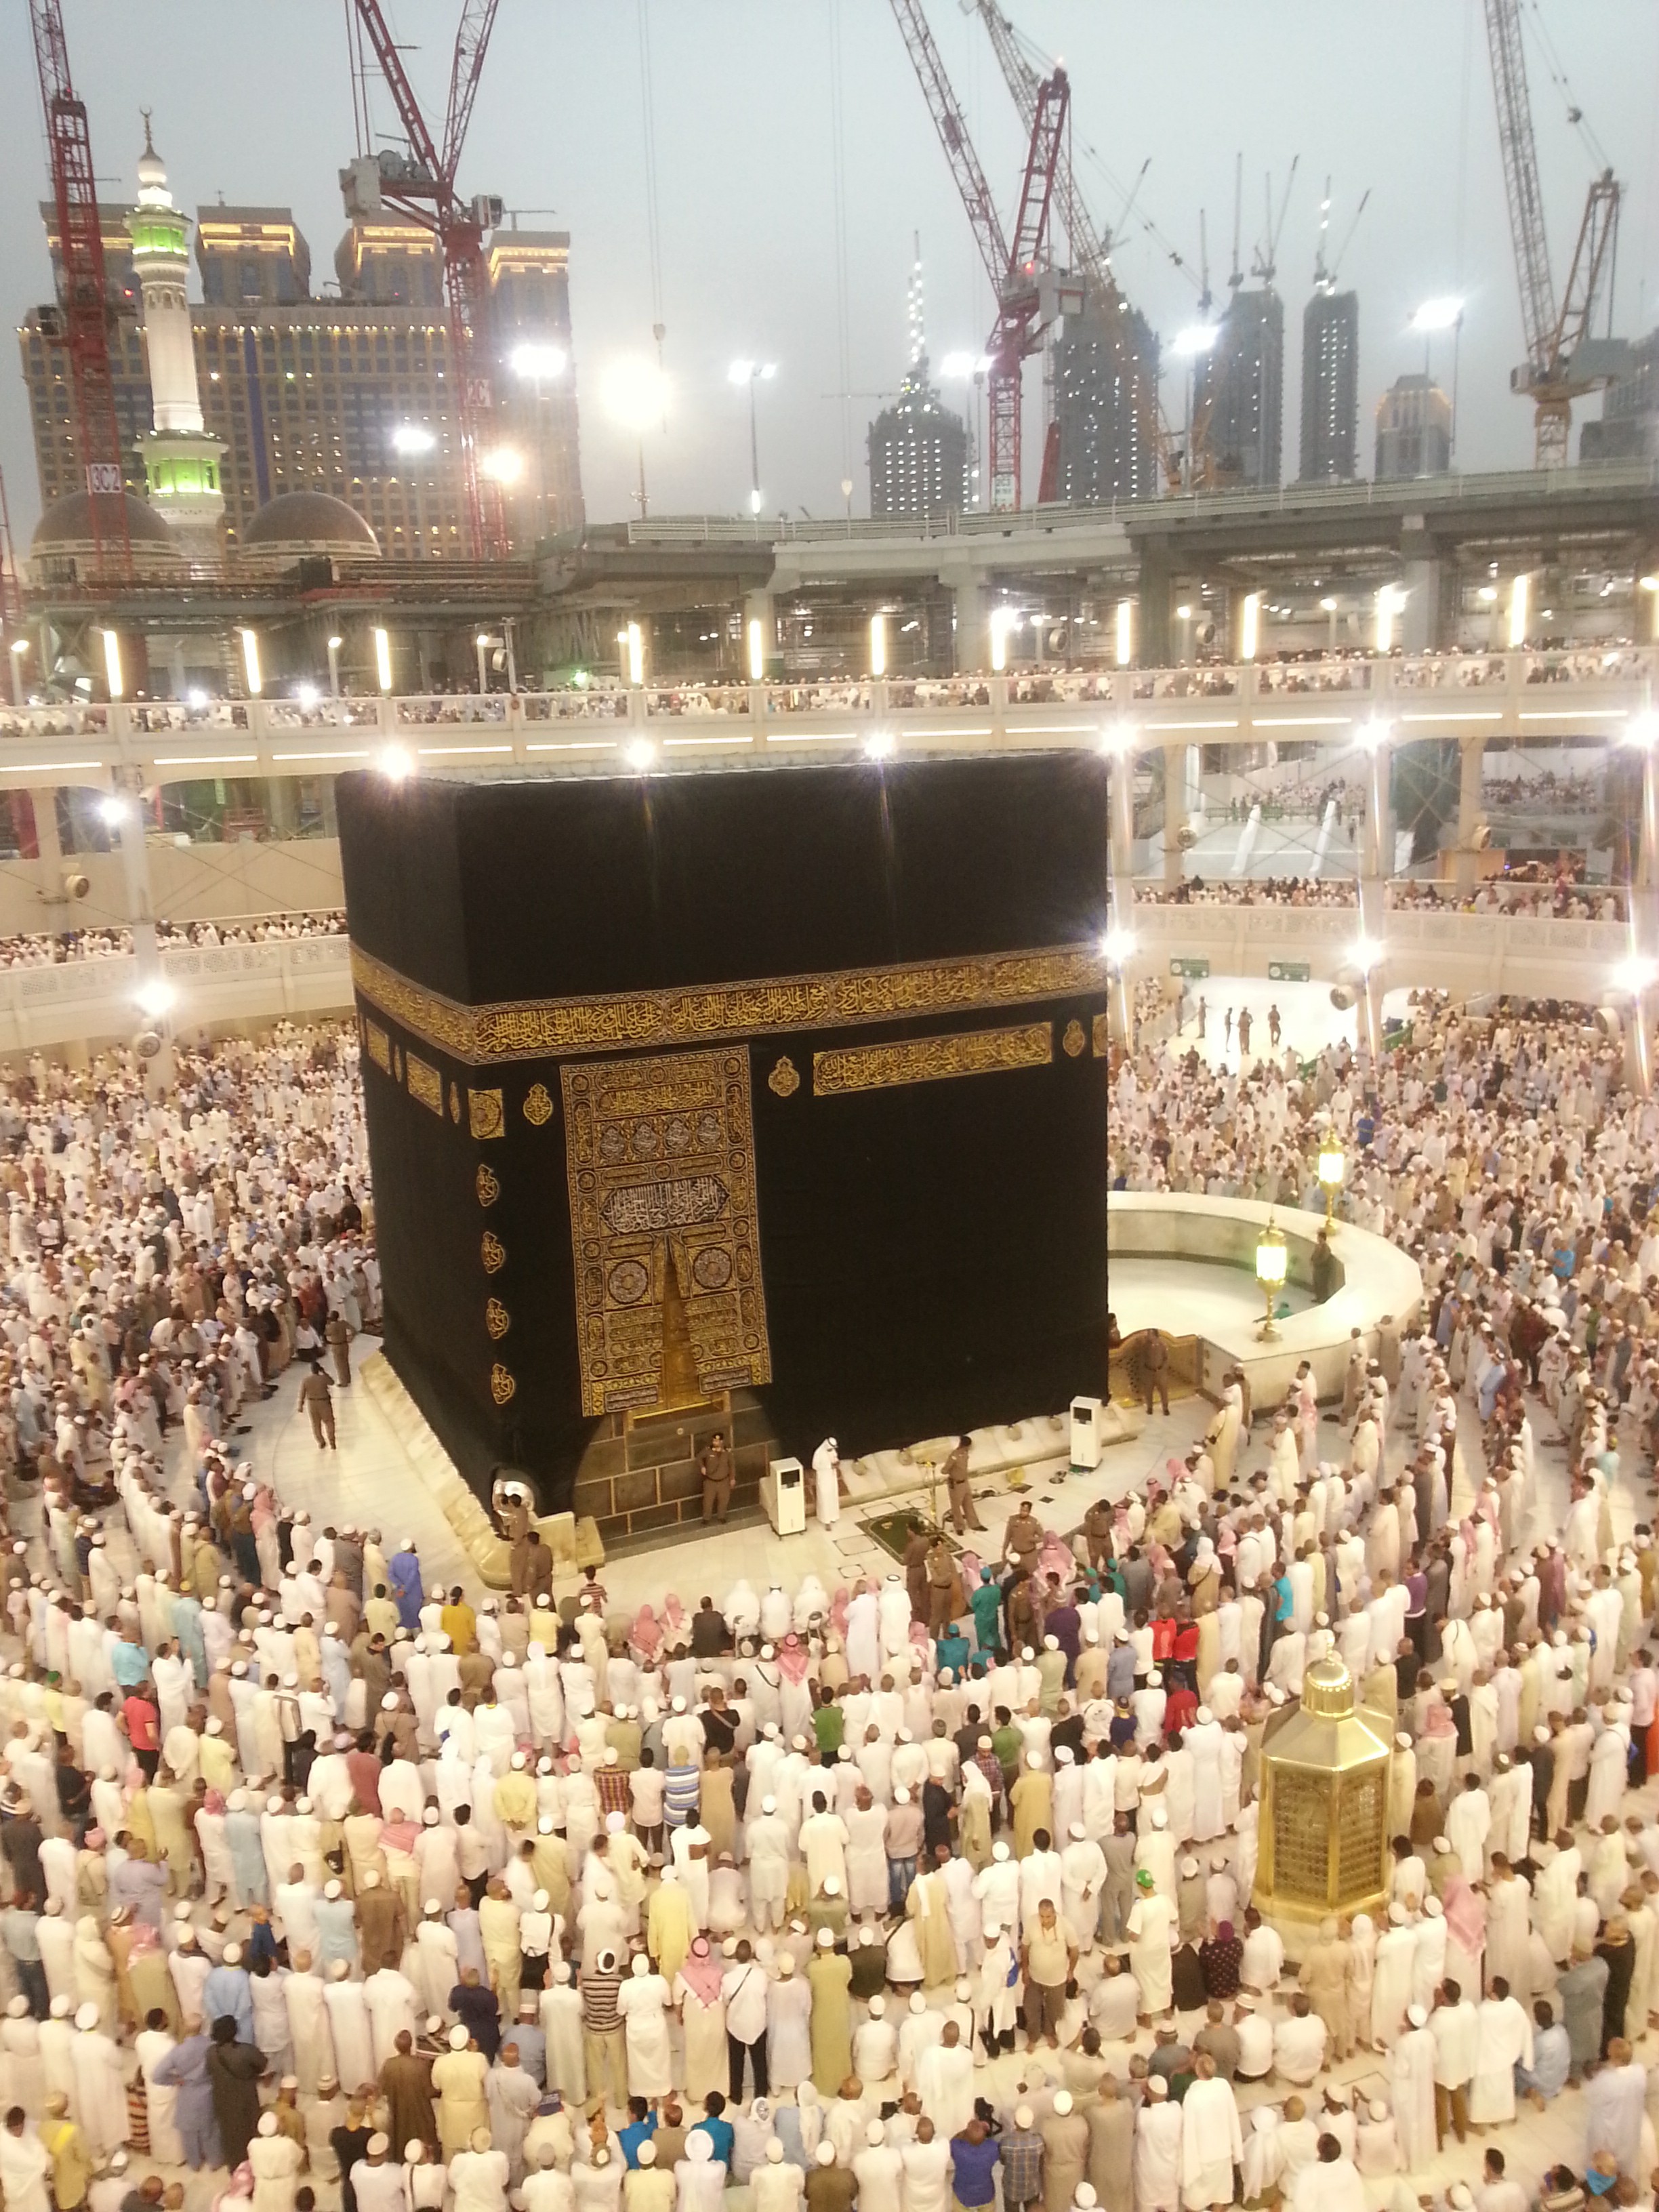 mecca - Image by Abubakr abrahams